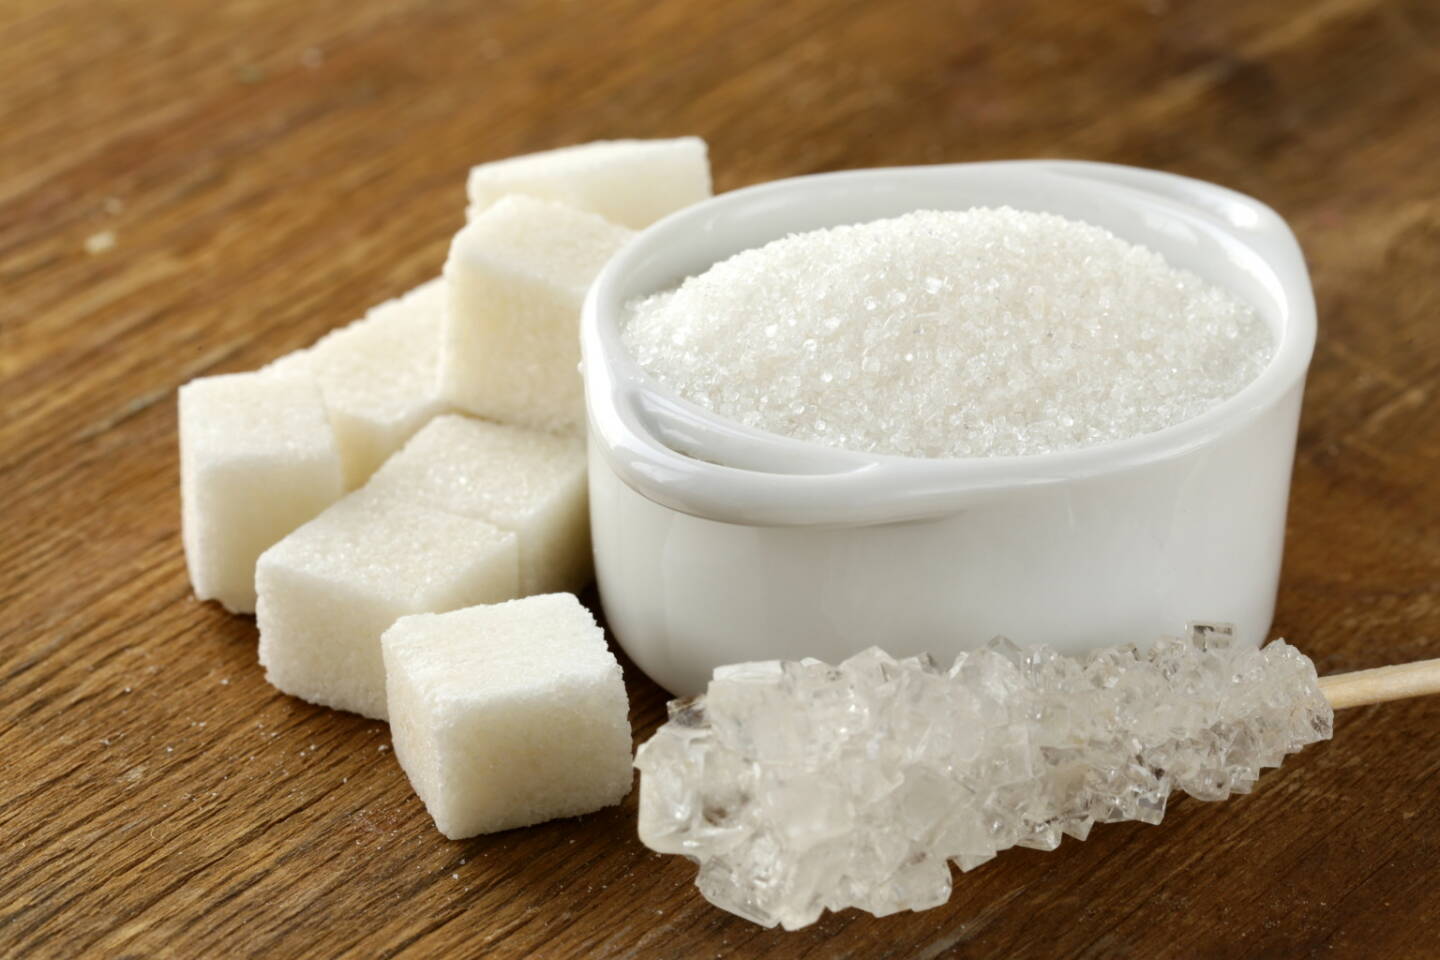 Zucker, Würfel, Dose, Kandis http://www.shutterstock.com/de/pic-128014142/stock-photo-several-types-of-white-sugar-refined-sugar-and-granulated-sugar.html (Bild: shutterstock.com)